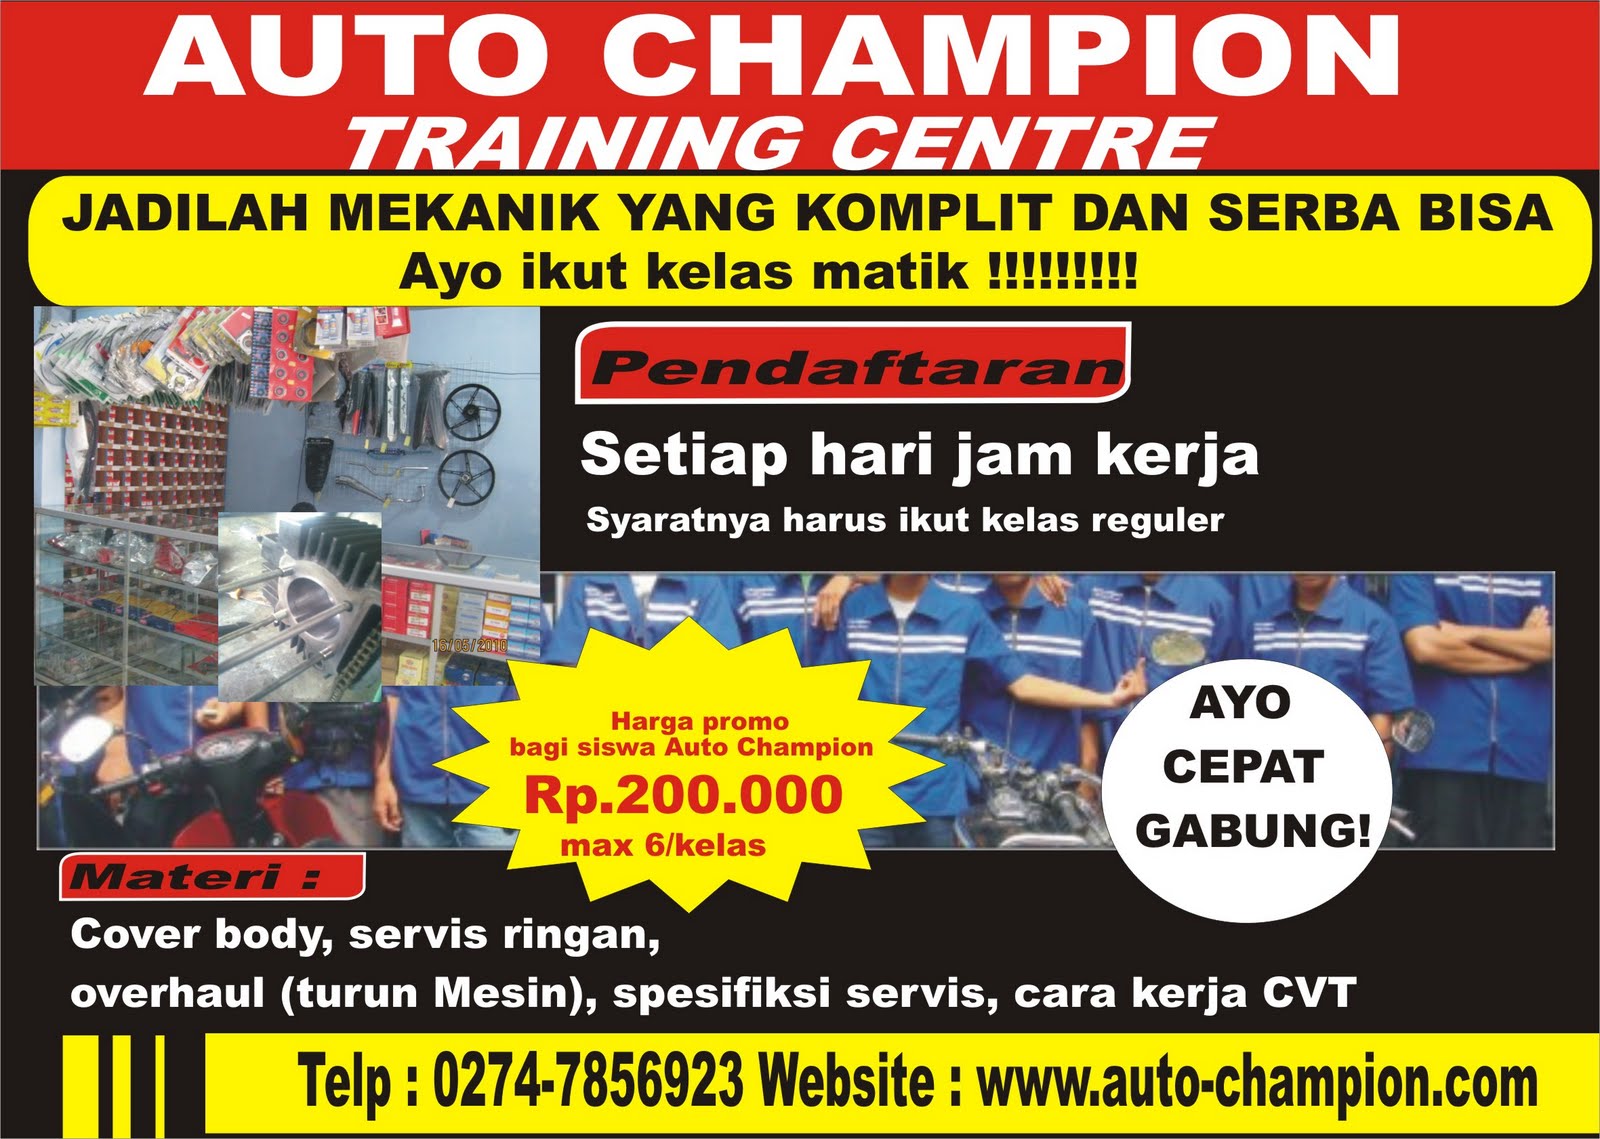 Ngintip Auto Champion Sebuah Kursusan Mekanik Motor Di Jogja